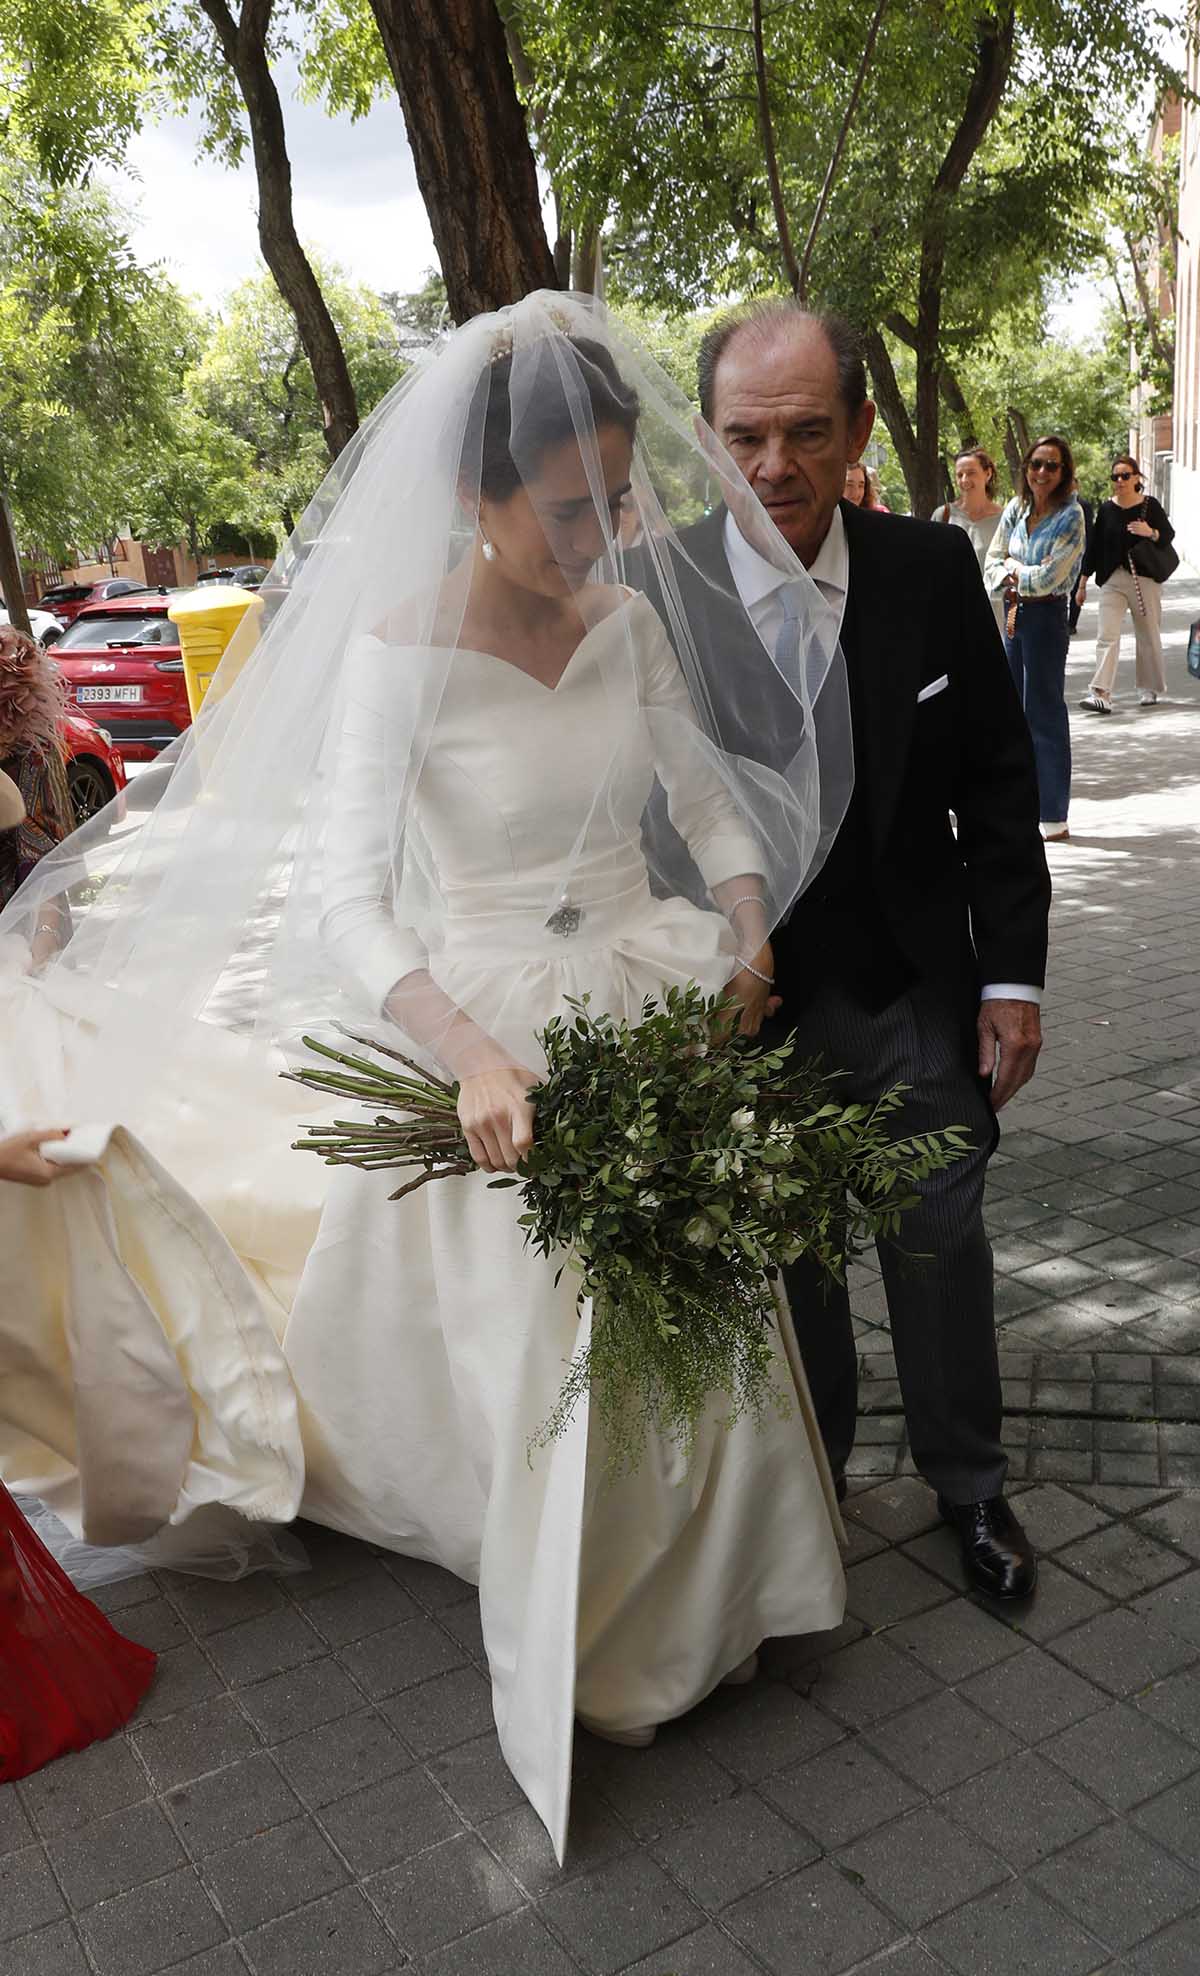 during the wedding Ricardo Gomez Acebo y Botin and Monica Remartinez y San Pedro in Colmenar Viejo (Madrid) on Saturday, 10 June 2023.